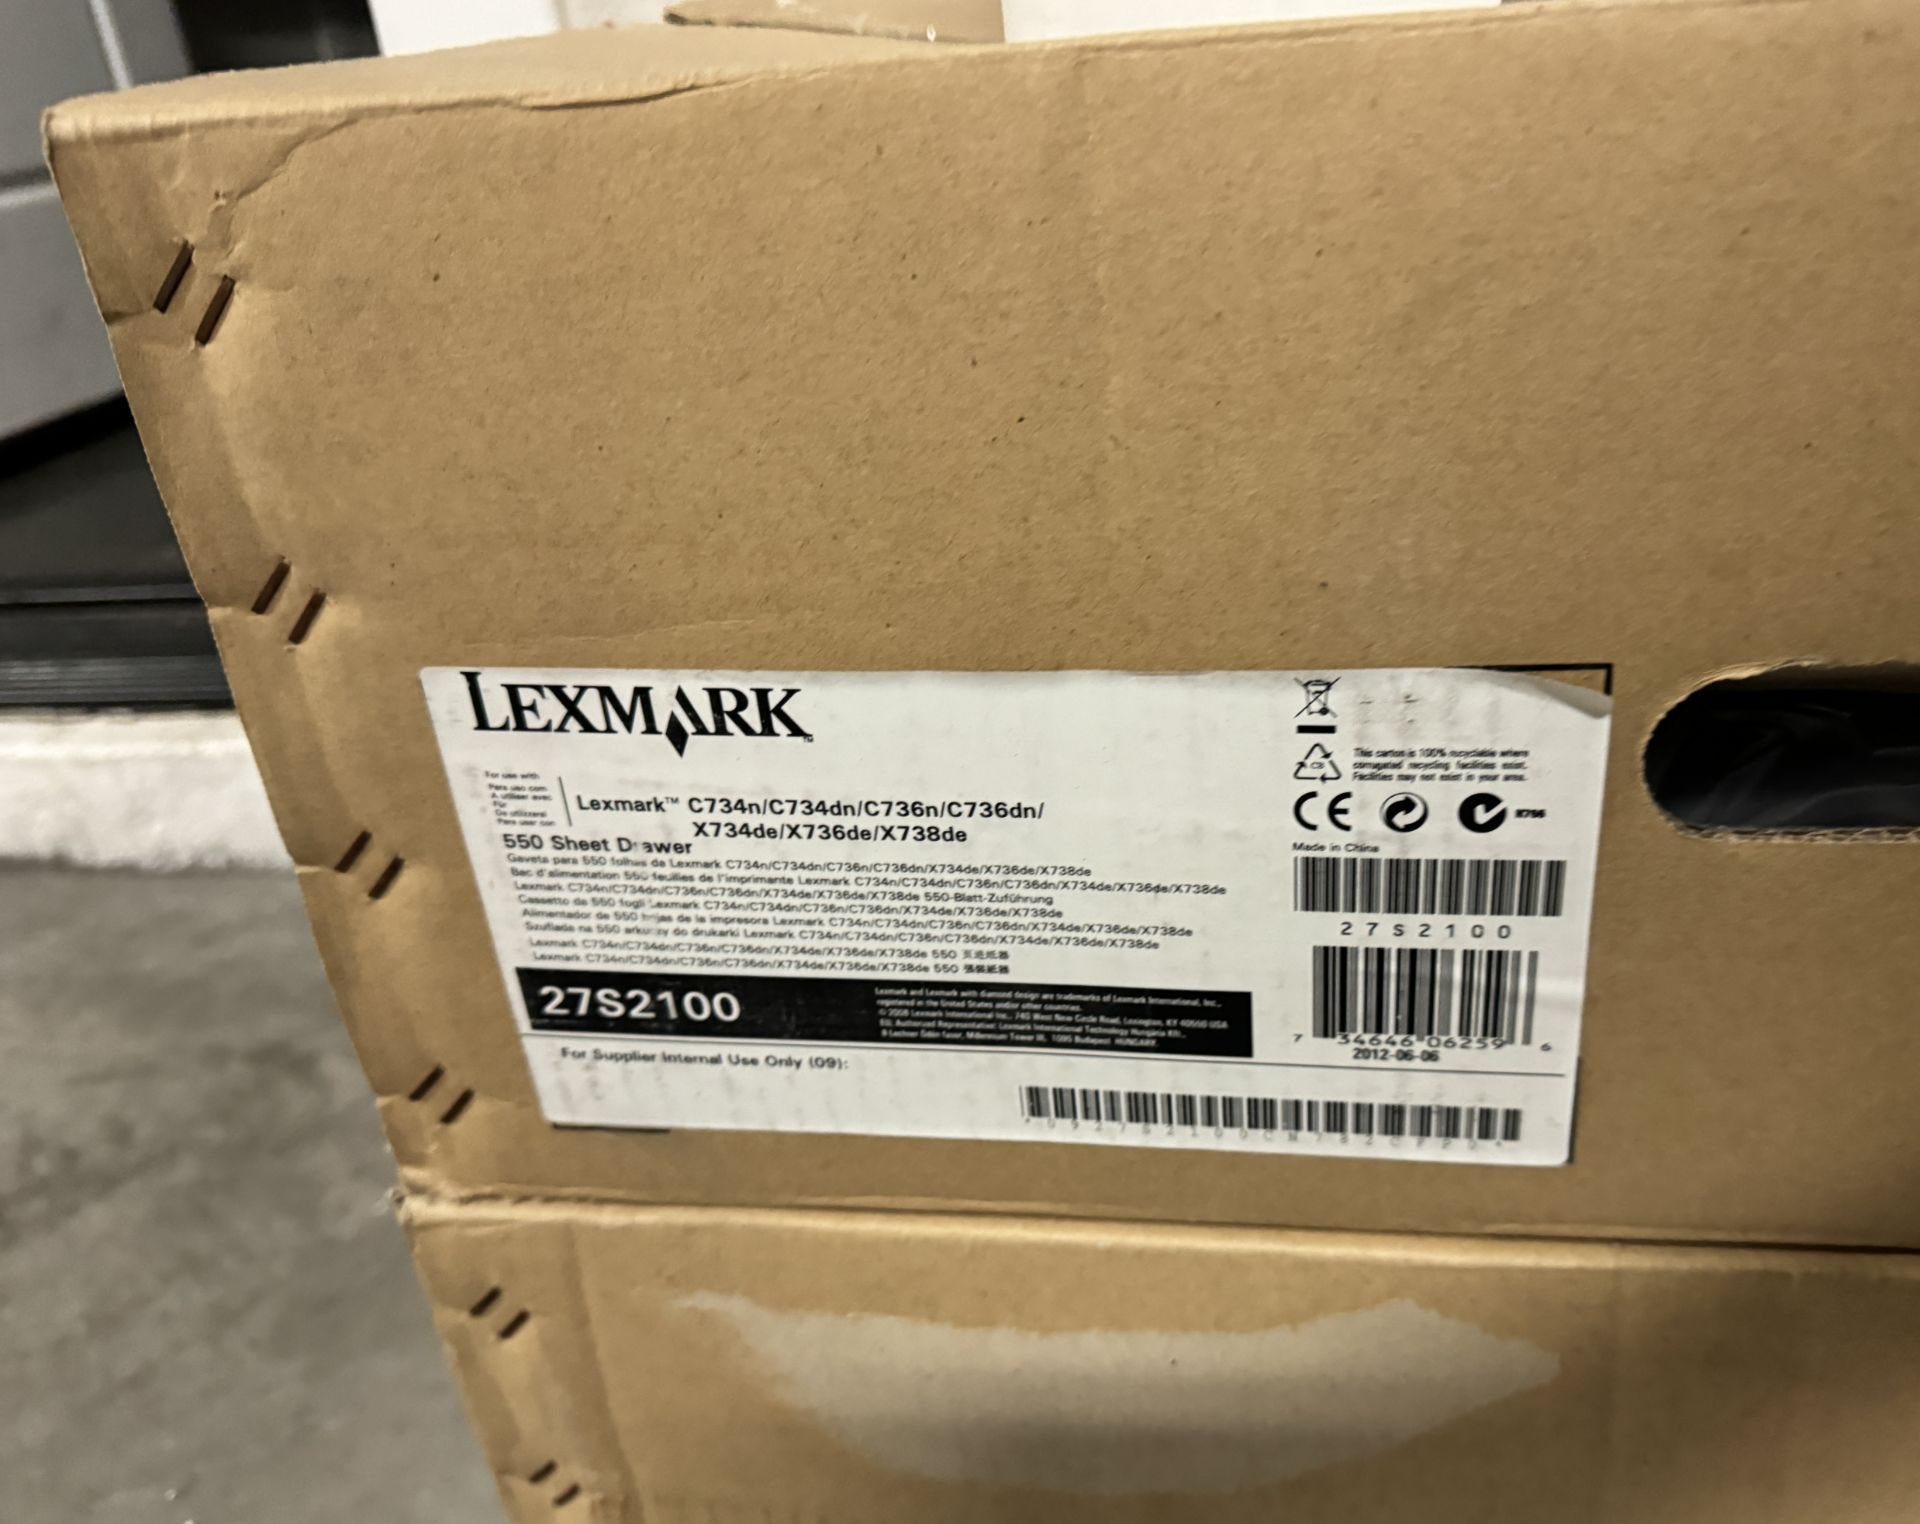 2 NEW LEXMARK PRINTER DRAWERS + XEROX LASER PRINTER - Image 2 of 3